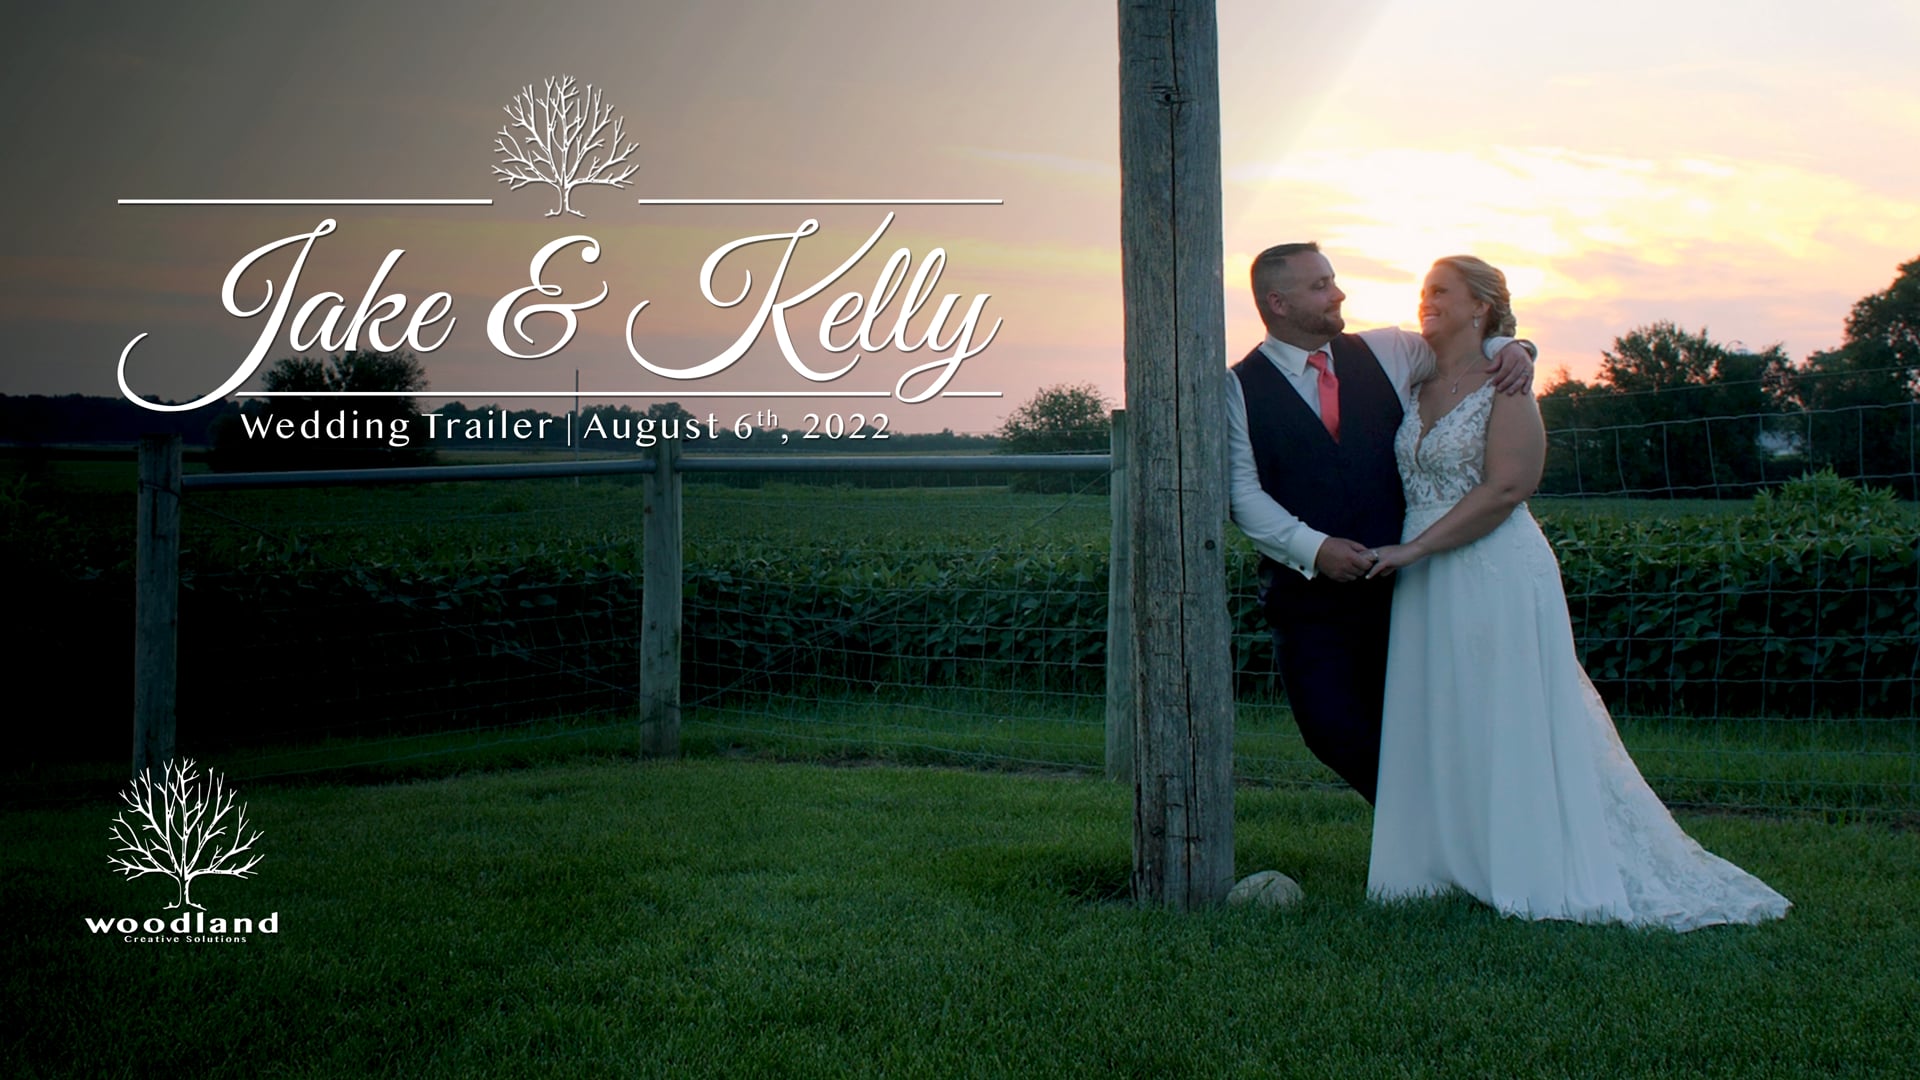 Jake & Kelly - Wedding Trailer